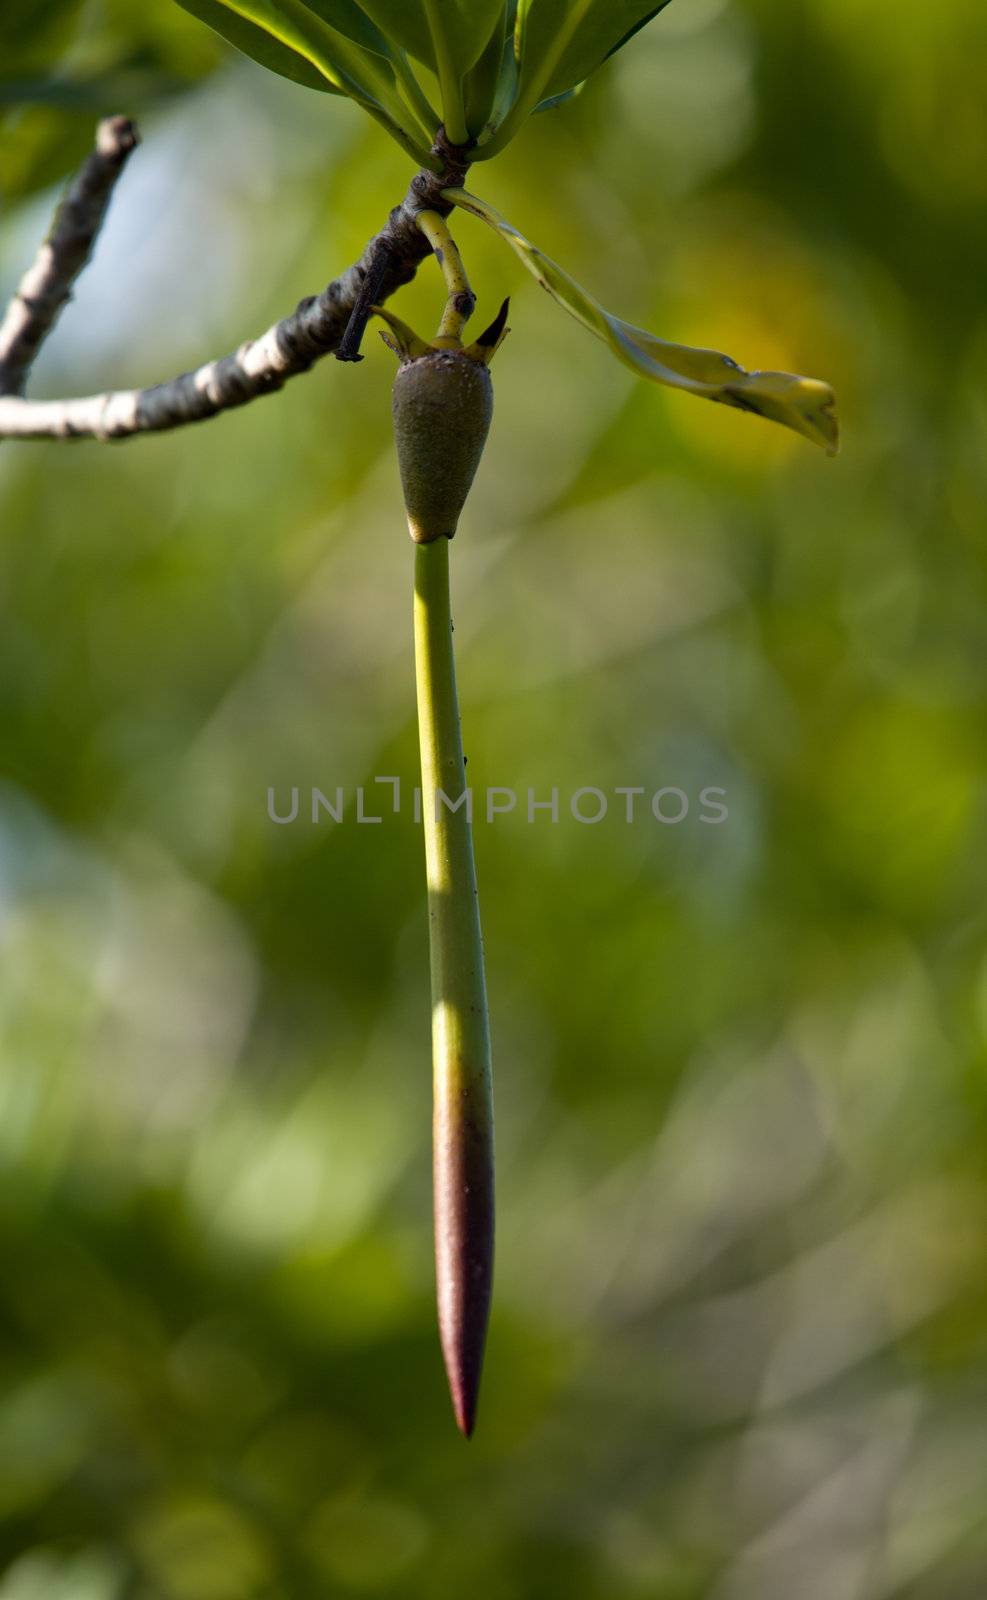 Seed pod of mangrove tree by steheap